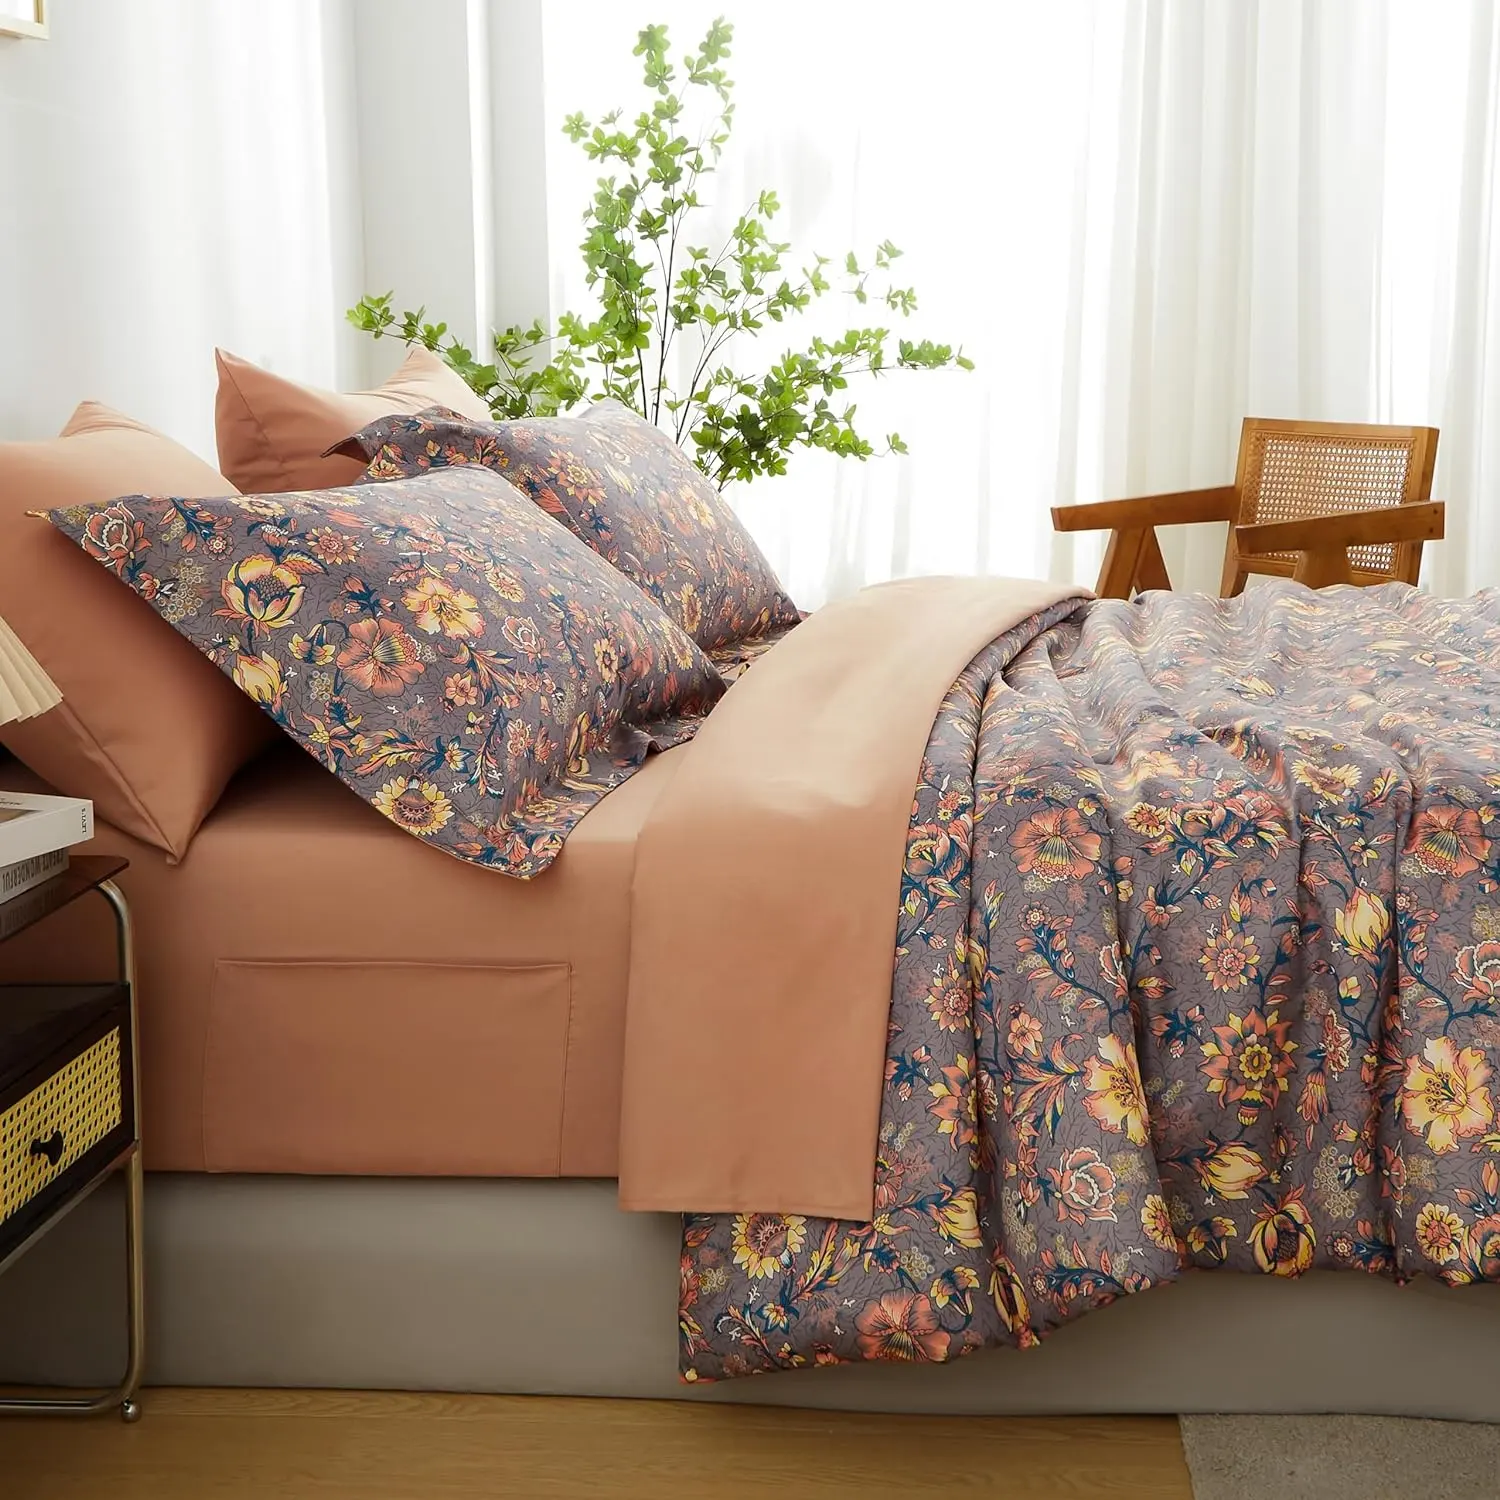 Vintage luxury Classic style floral pattern polyester bedding set duvet cover set comforter bedding